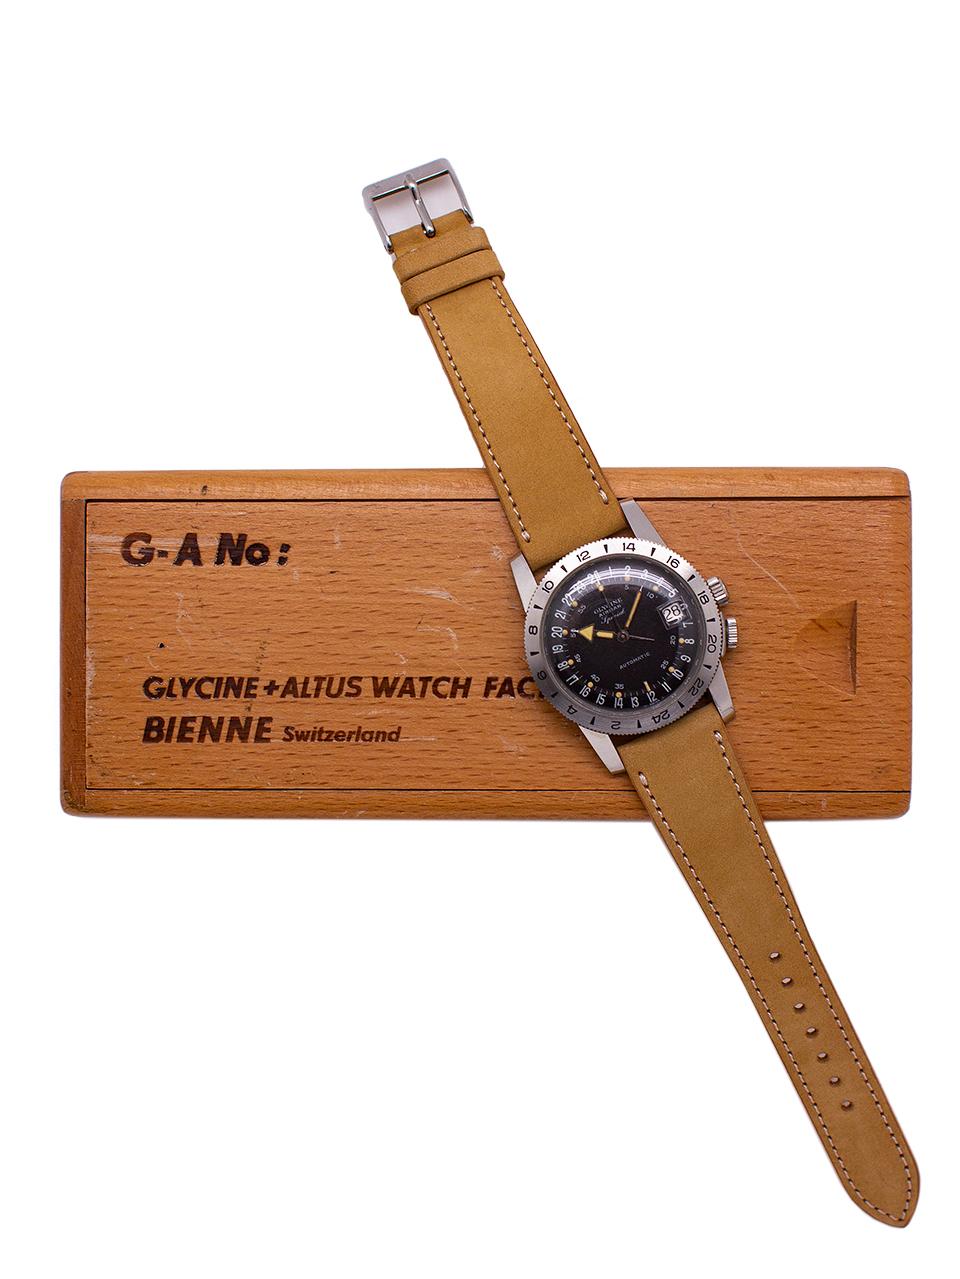 Men's Glycine stainless steel Airman Automatic wristwatch, circa 1965 